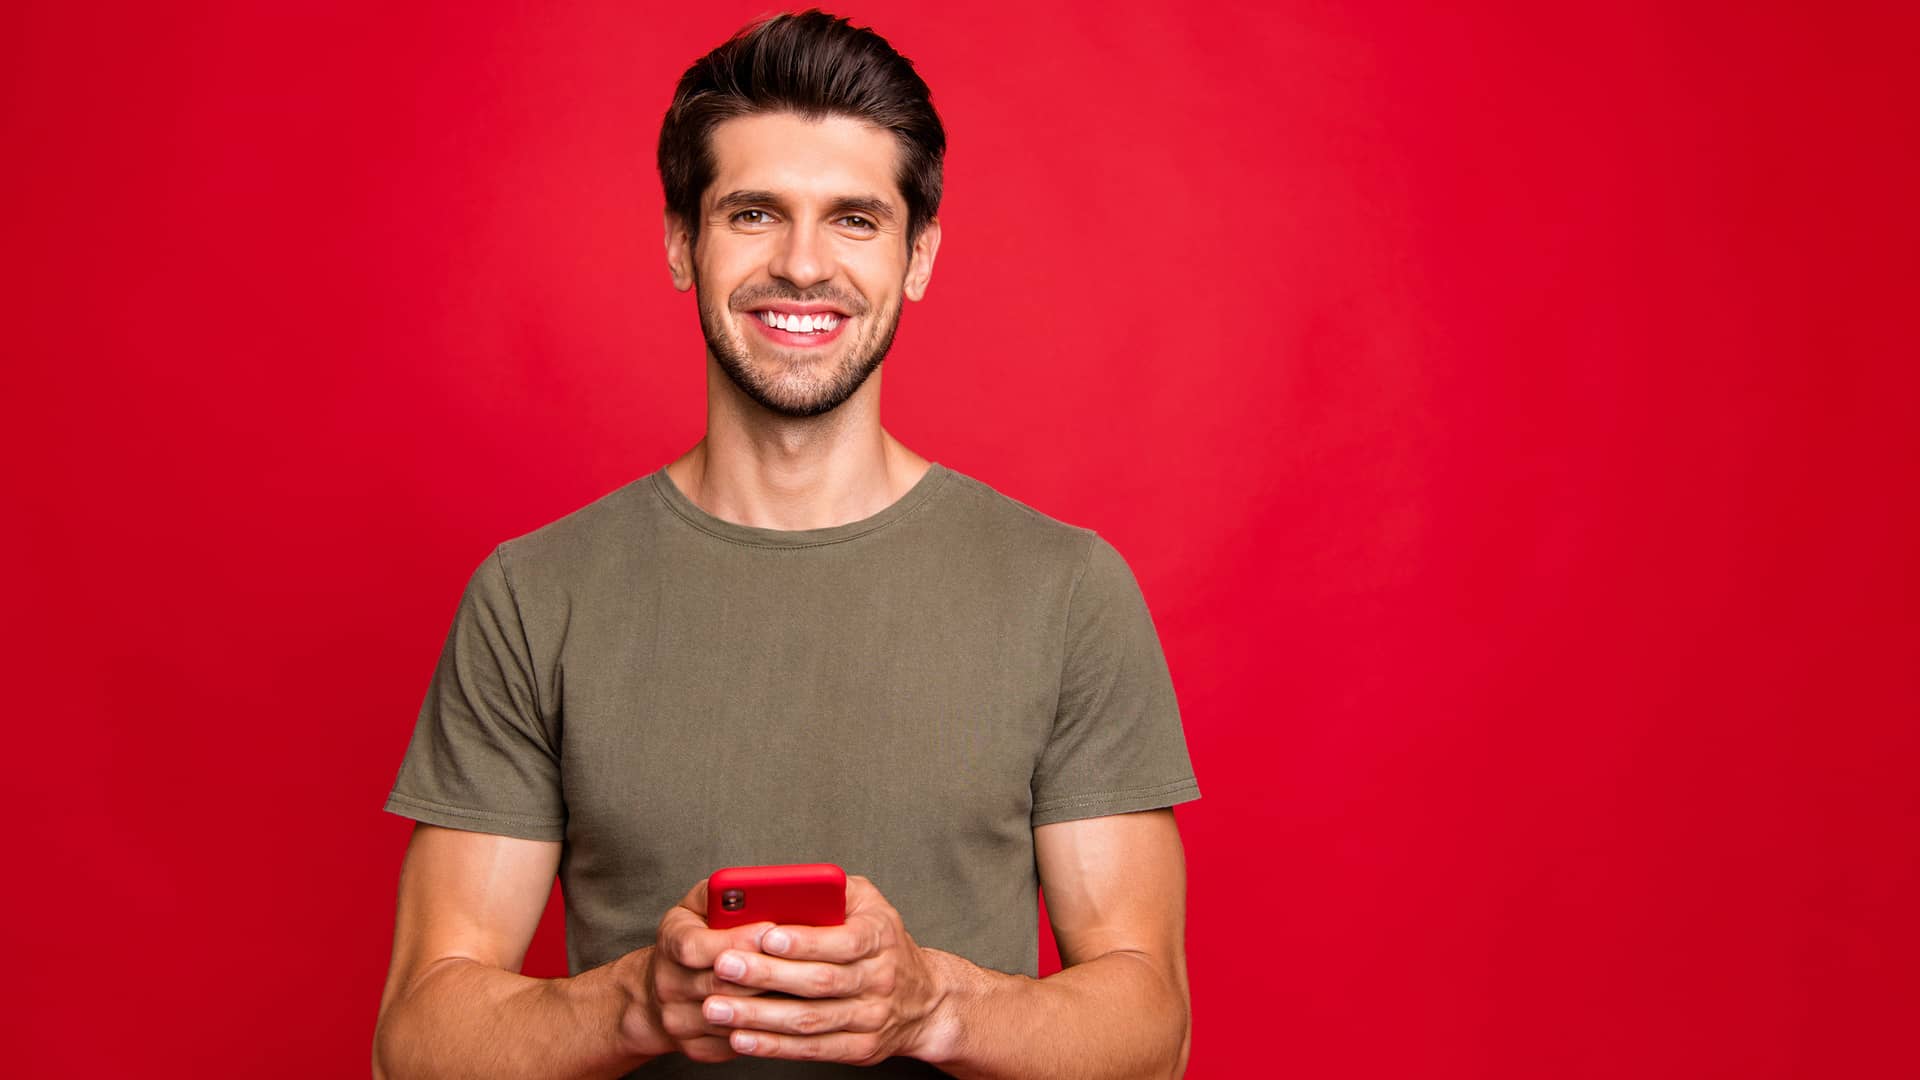 Joven sonriente con teléfono móvil simboliza las tarifas de pepephone